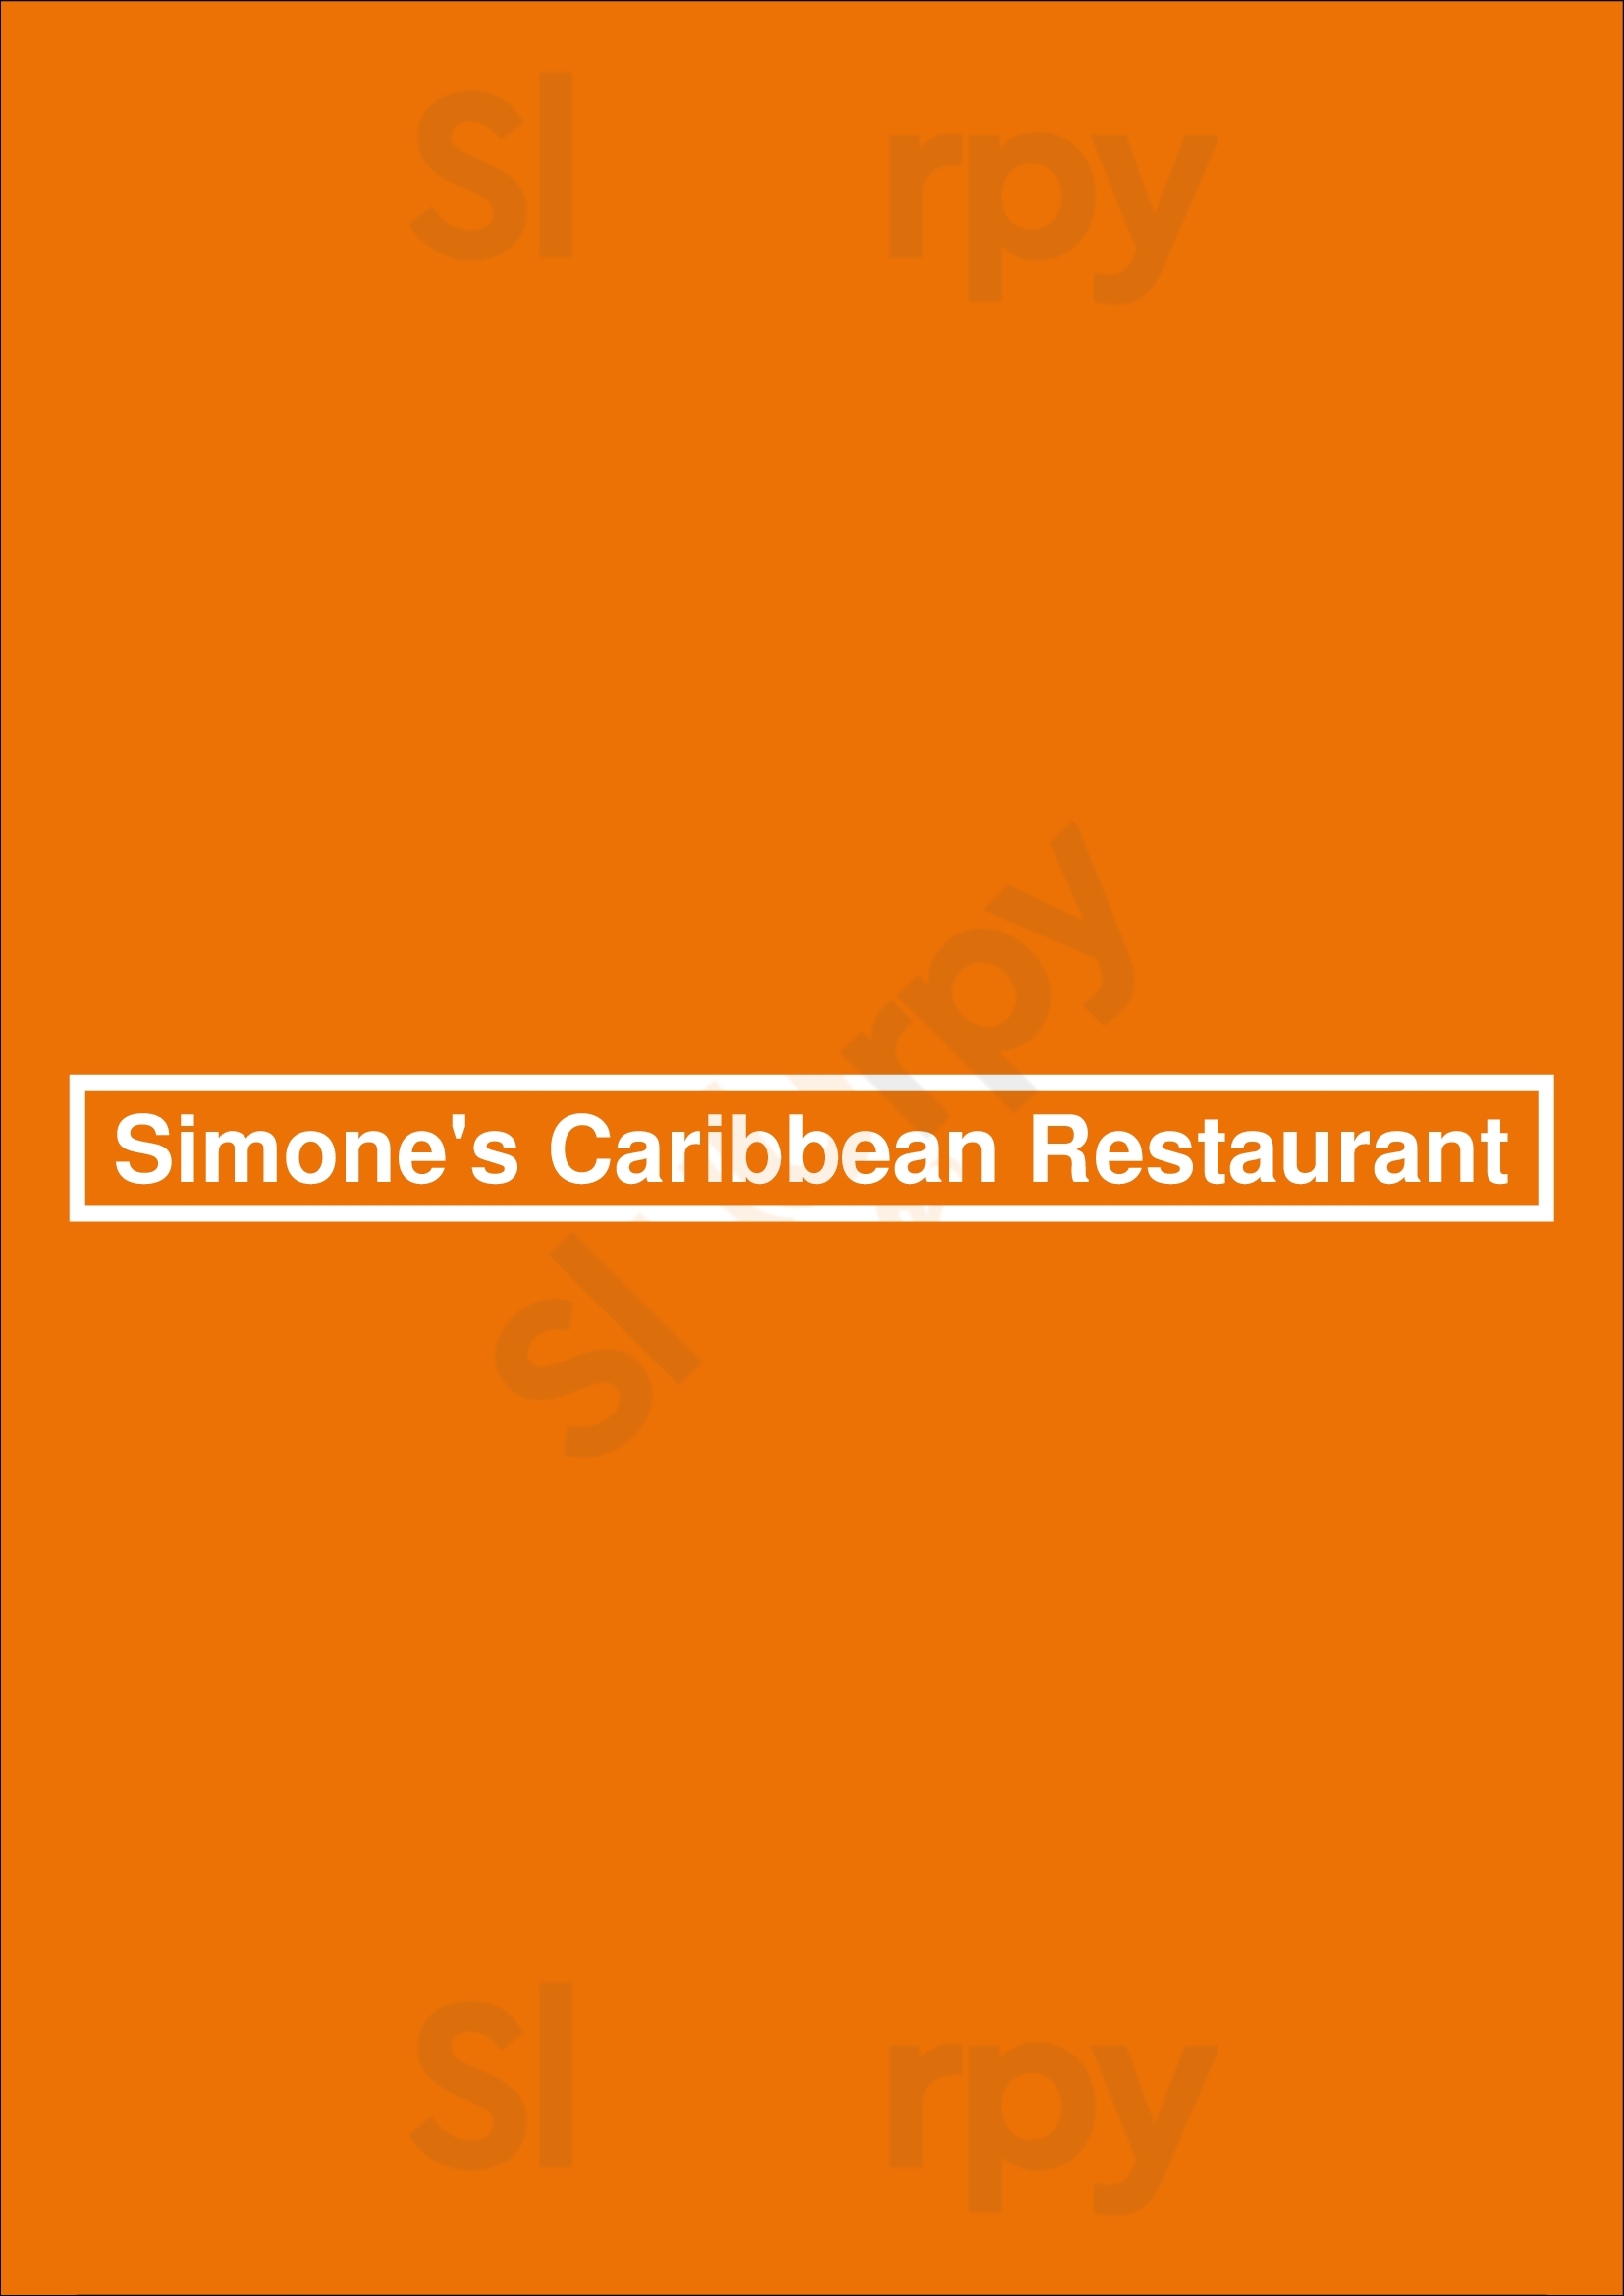 Simone's Caribbean Restaurant Toronto Menu - 1